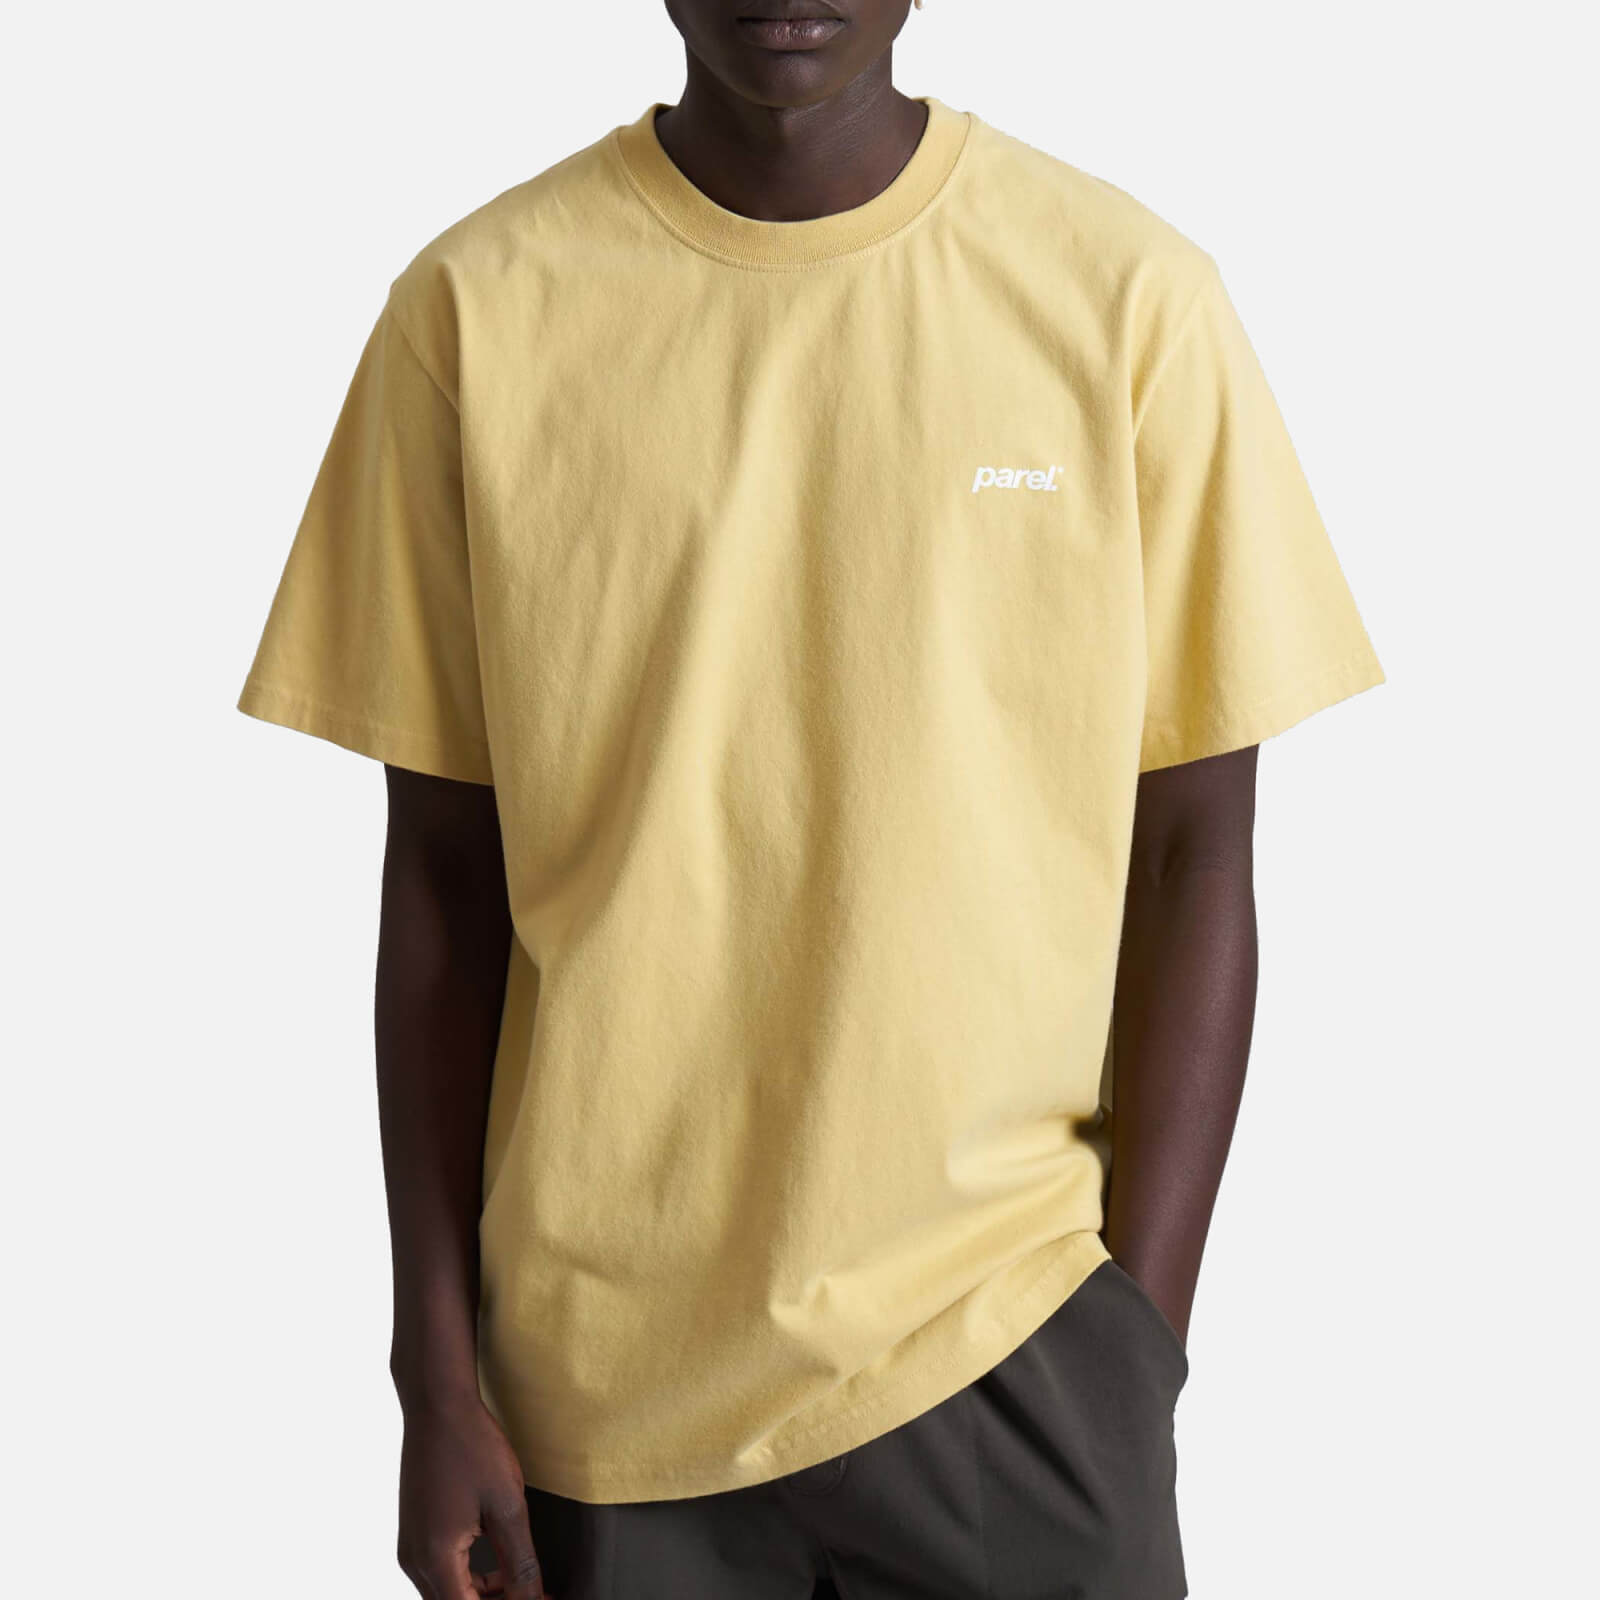 Parel Studios Men's Classic BP T-Shirt - Yellow - S